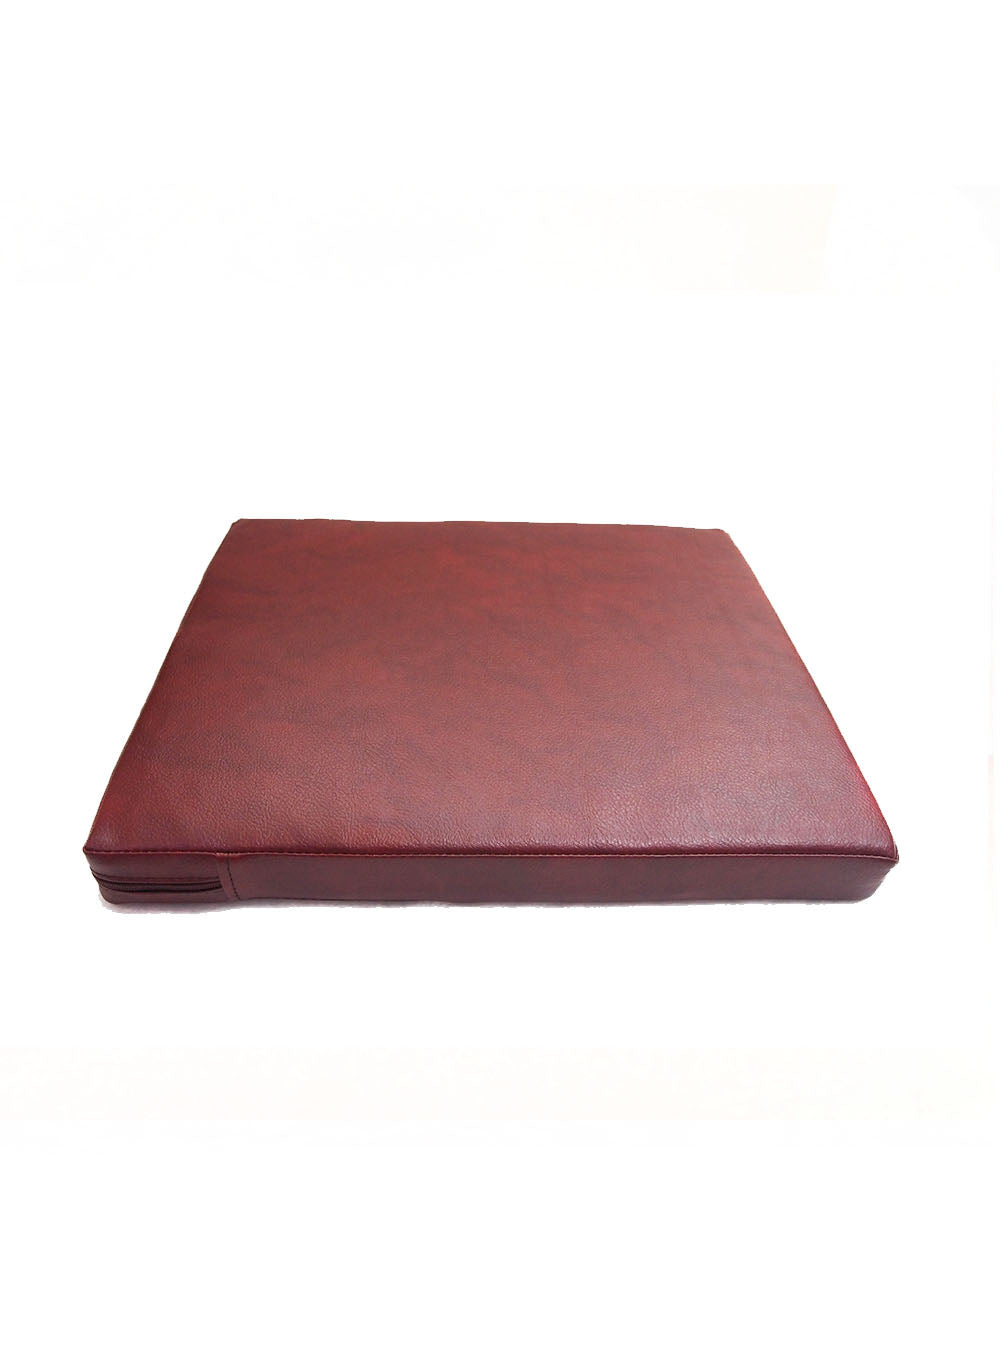 Flat Meditation PVC Cover Cushion (2 Inches)